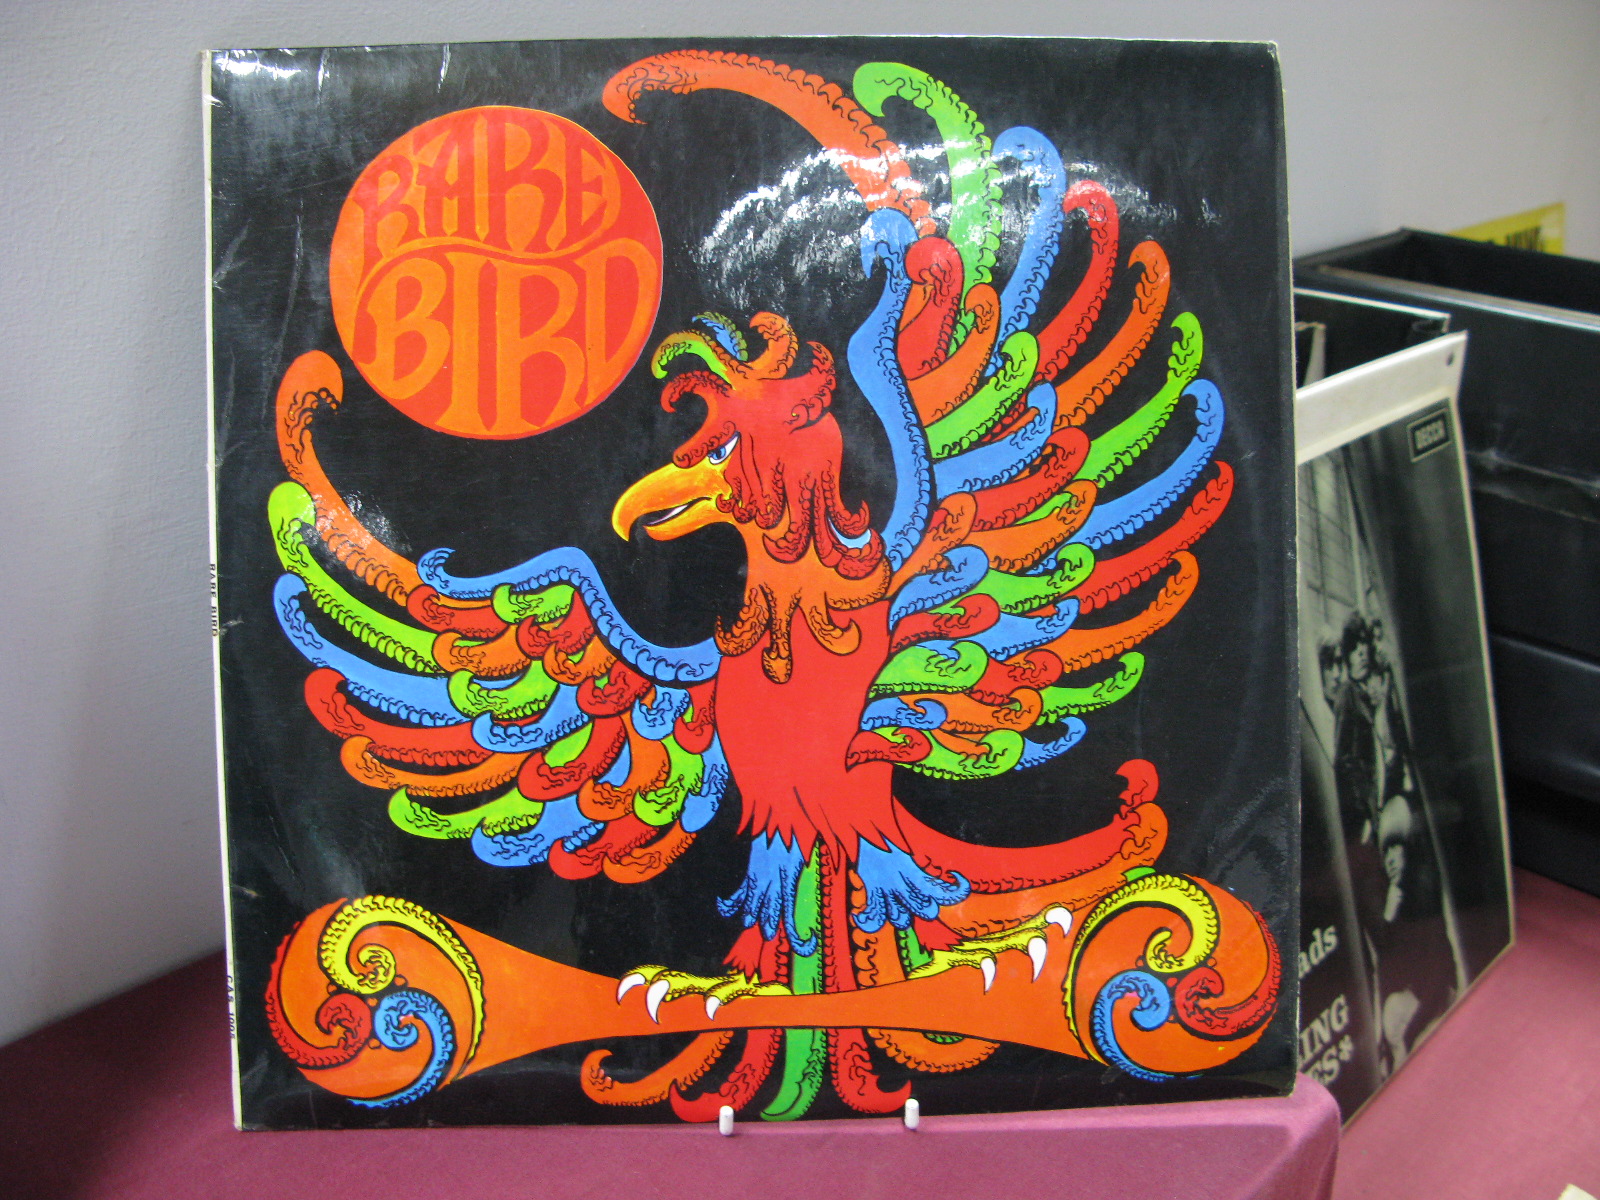 Rare Bird: 'Same Title' LP, pink charisma label, 1969, CAS 1005, stereo, A/B-2 matrix endings.